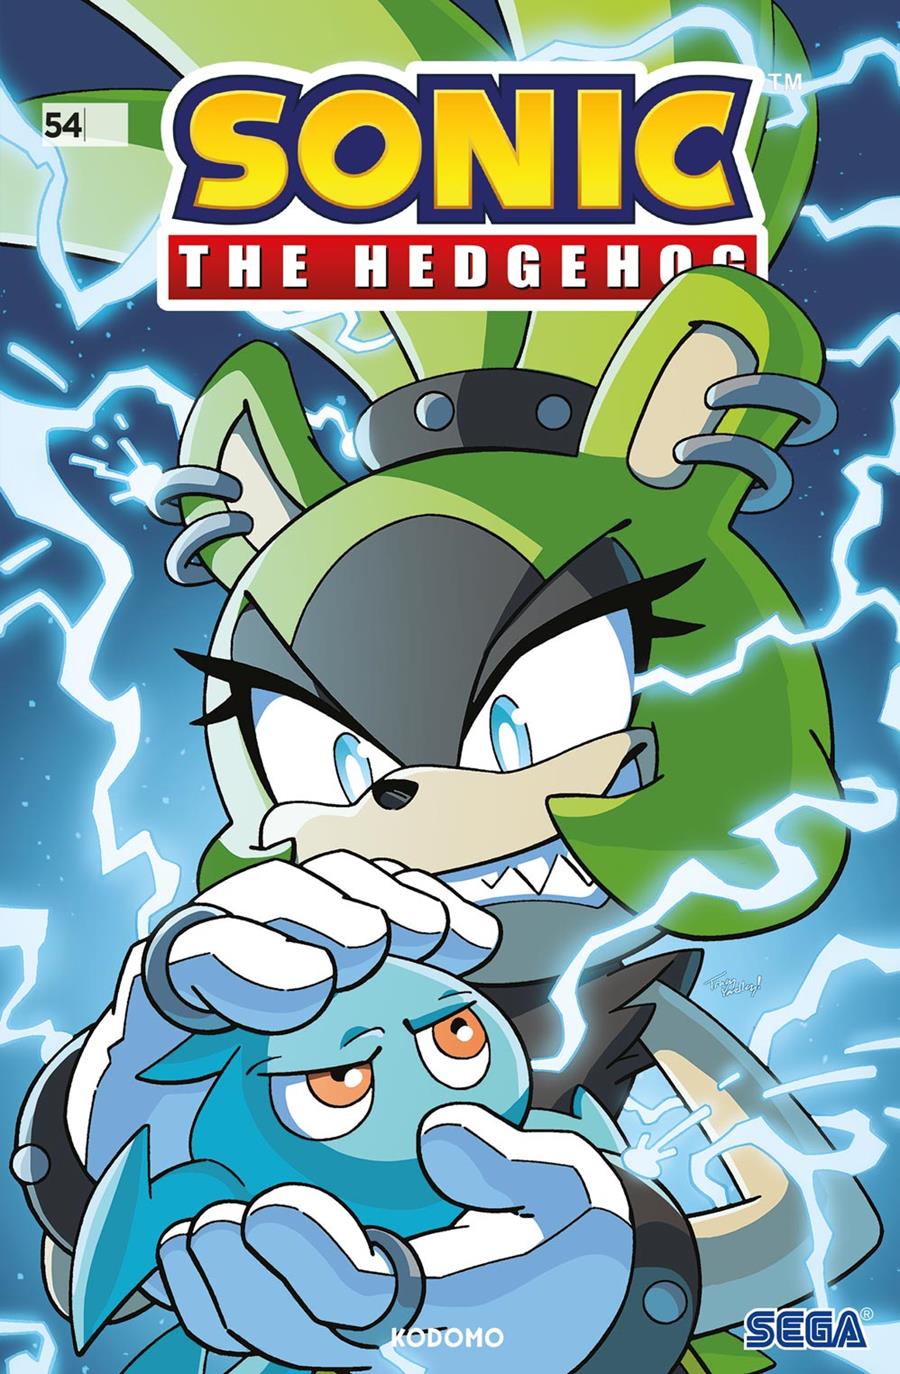 Sonic The Hedgehog núm. 54 | N0224-ECC36 | Evan Stanley, Natalie Haines | Terra de Còmic - Tu tienda de cómics online especializada en cómics, manga y merchandising